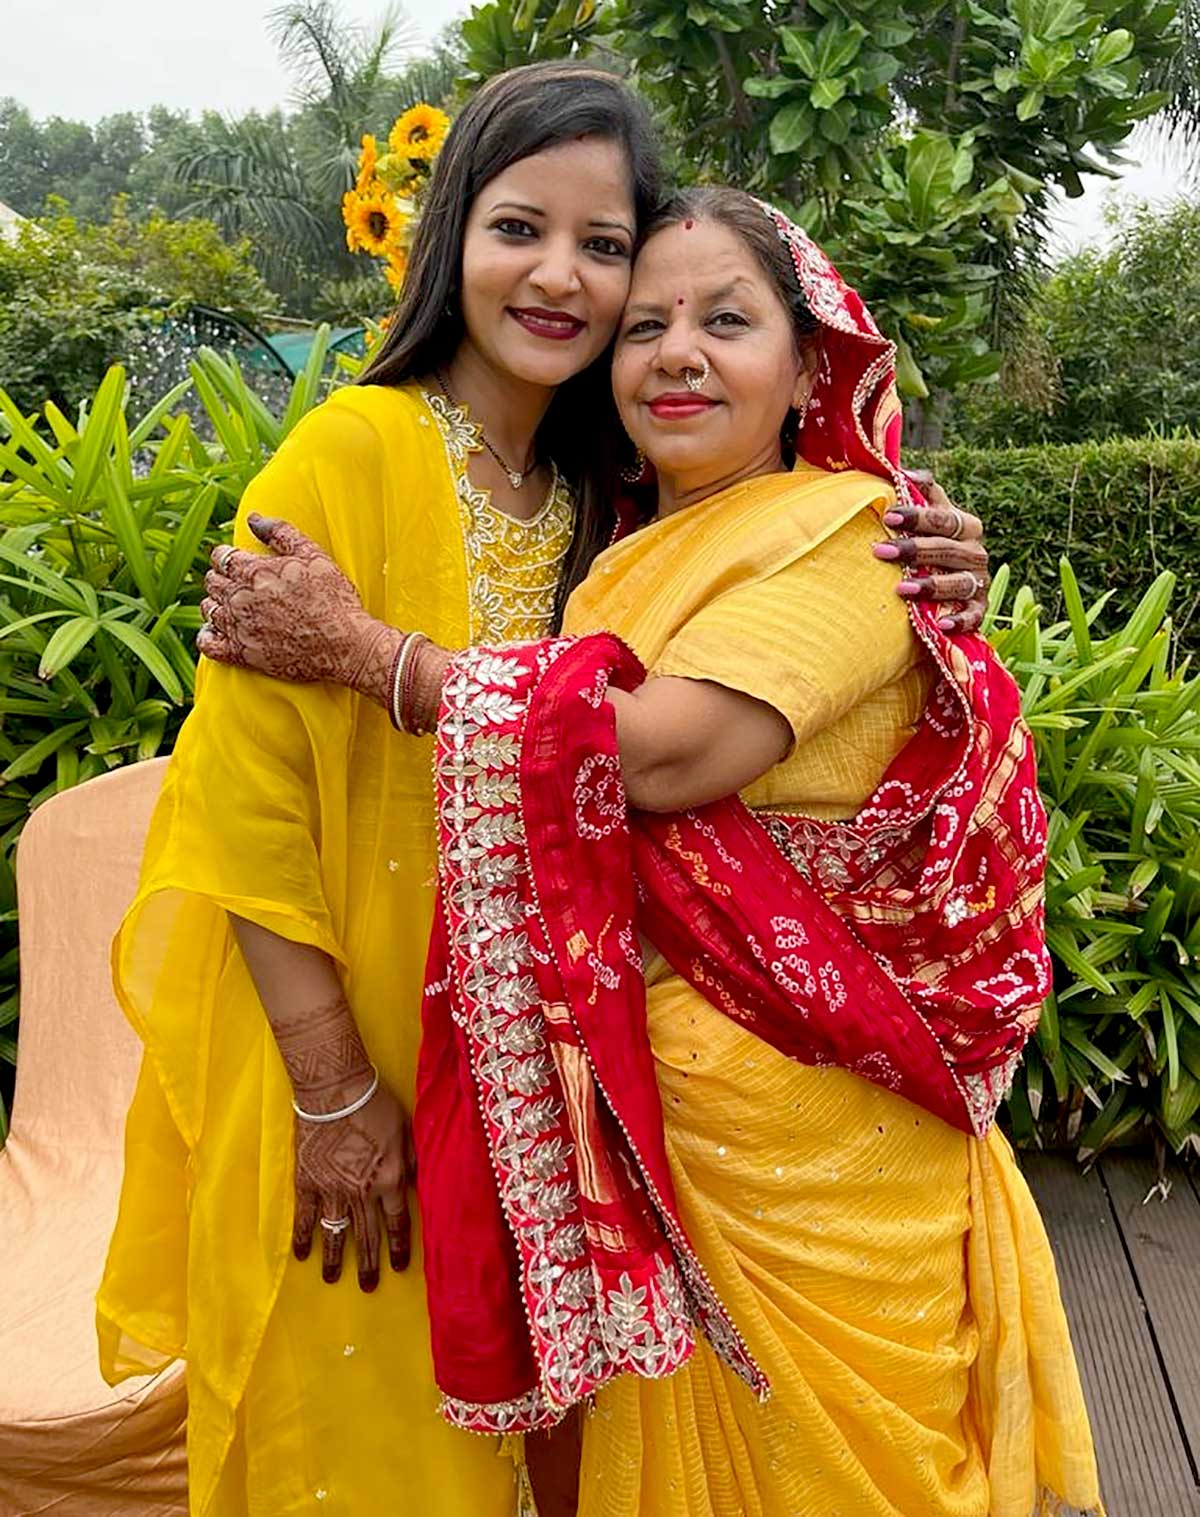 Puja Agarwalla with her mother, Sushila Tekriwal